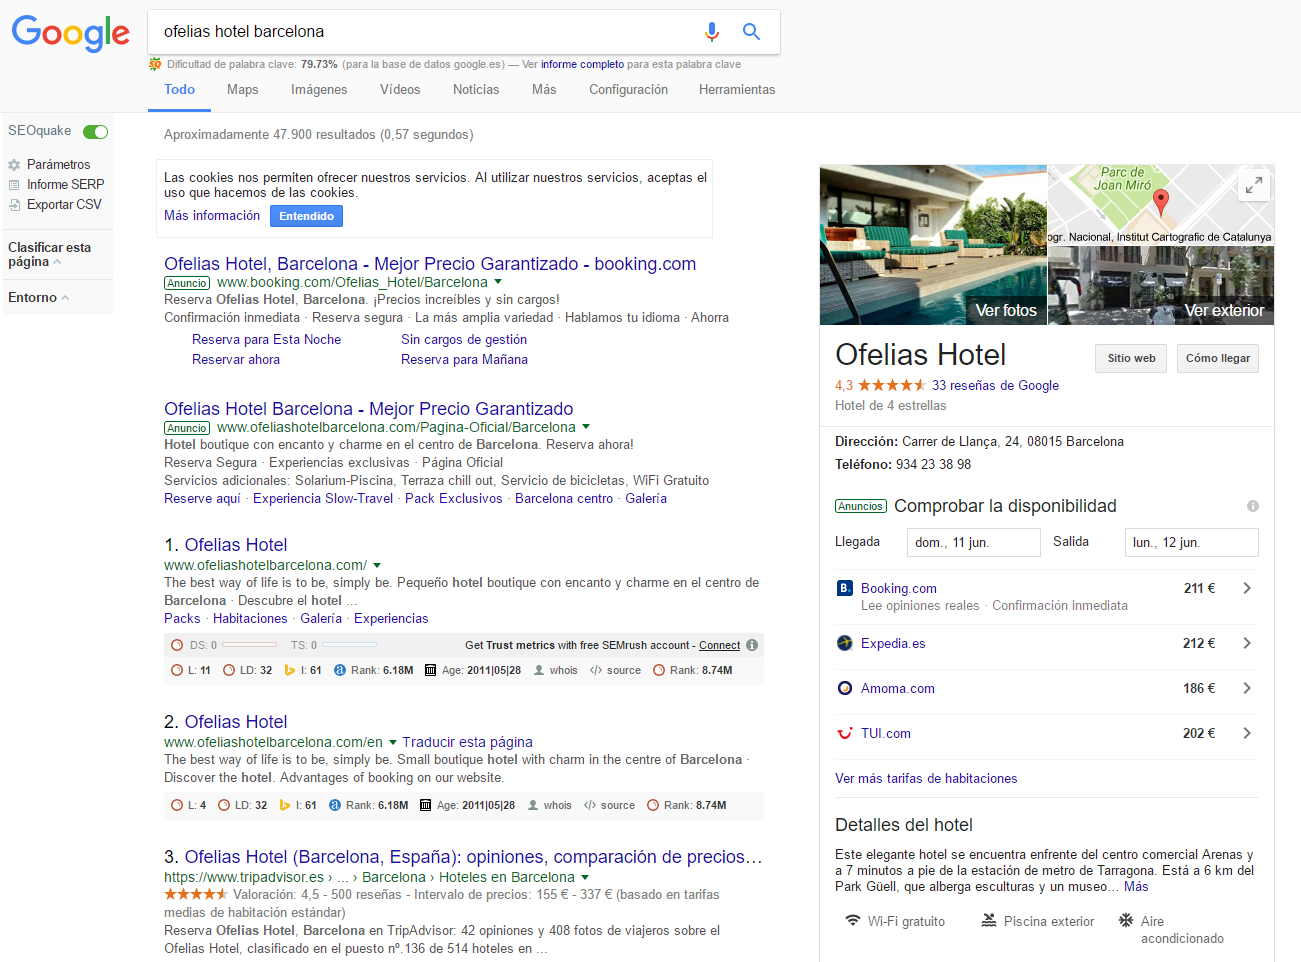 SEO Google hoteles